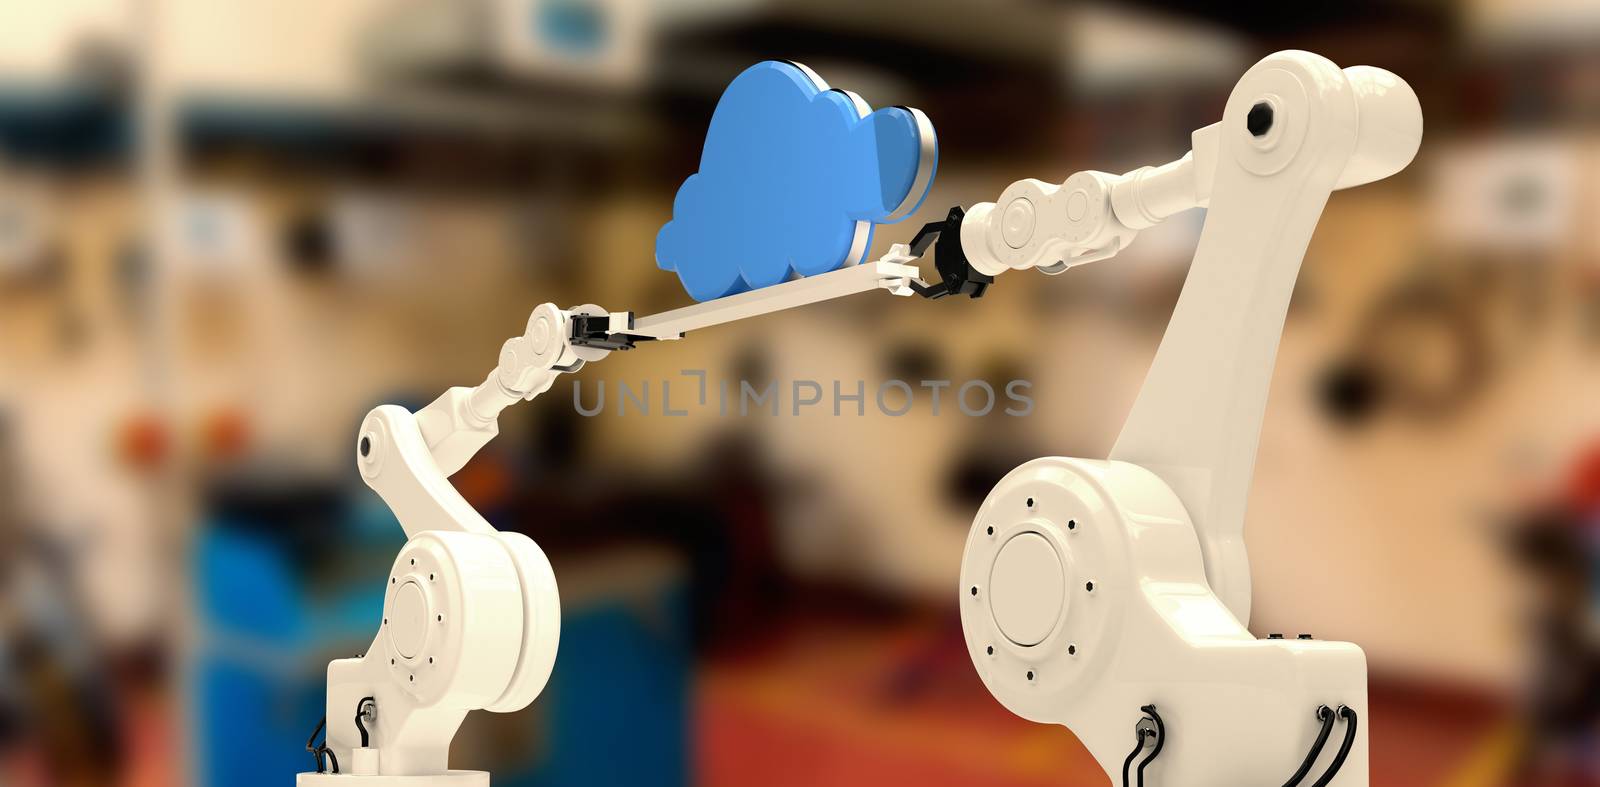 Robotic hands holding blue cloud against background against workshop